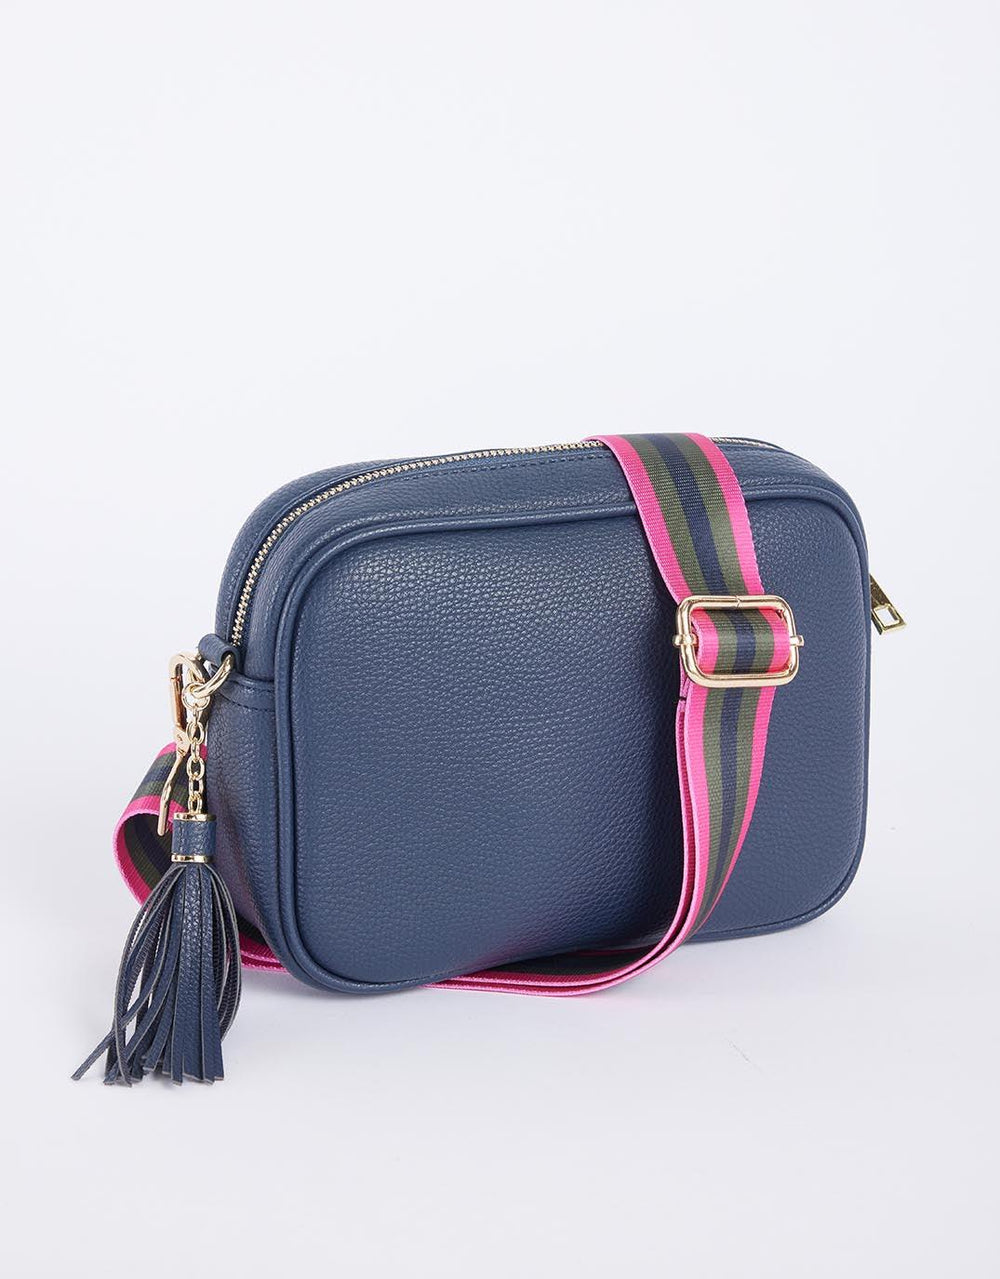 paulaglazebrook. - Zoe Crossbody Bag - Navy with Khaki/Hot Pink Stripe - paulaglazebrook Accessories